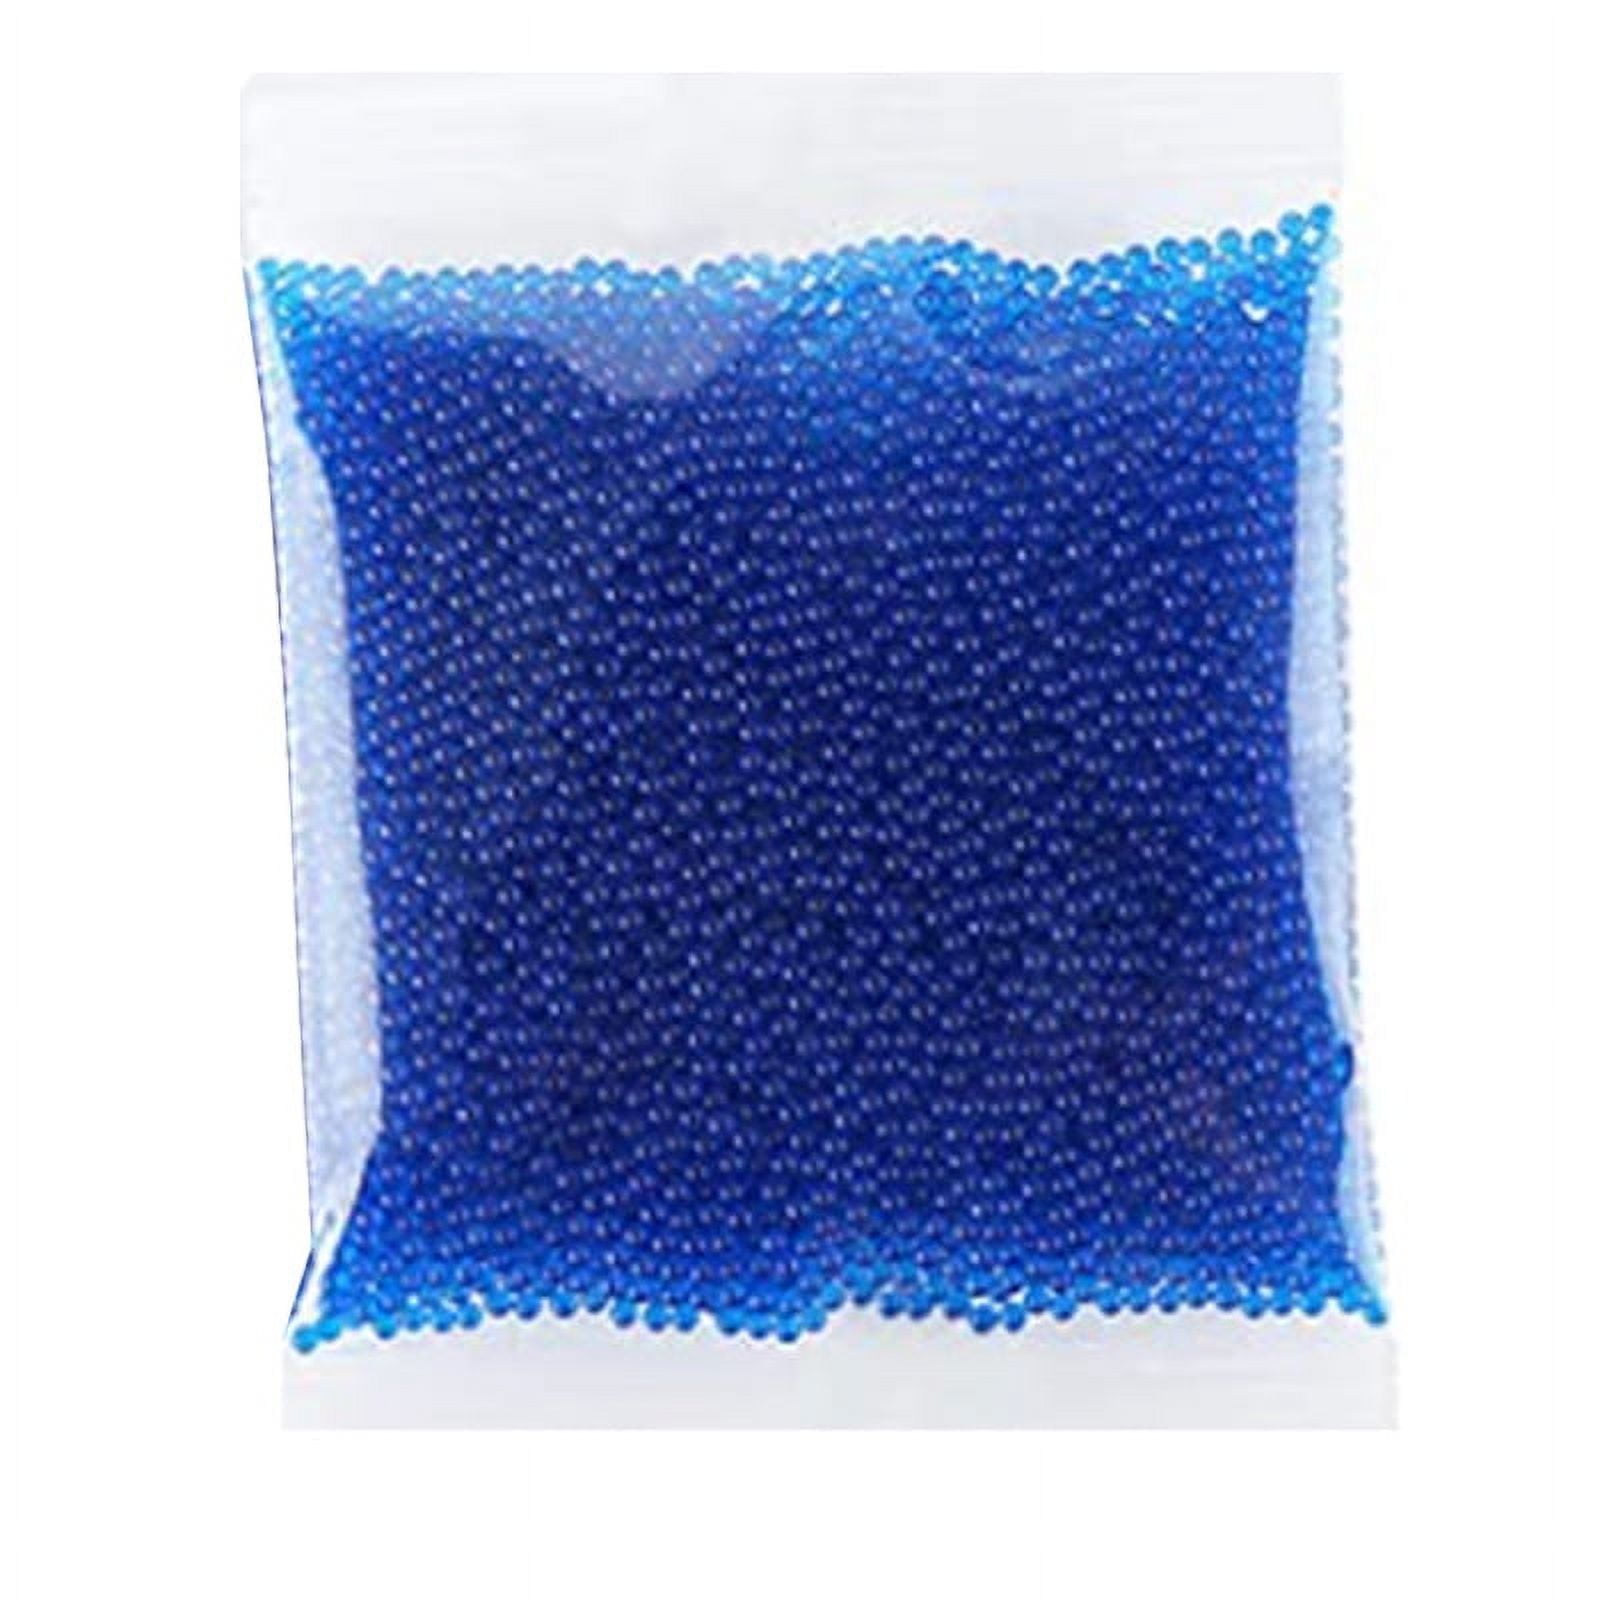 Water Beads Blue Refill Ammo (6 Pack-10,000 Per Pack) 7-8mm Water Beads Gel  Splater Ball Compatible With Splatter Ball Toy - Soft Gun Bullets -  AliExpress